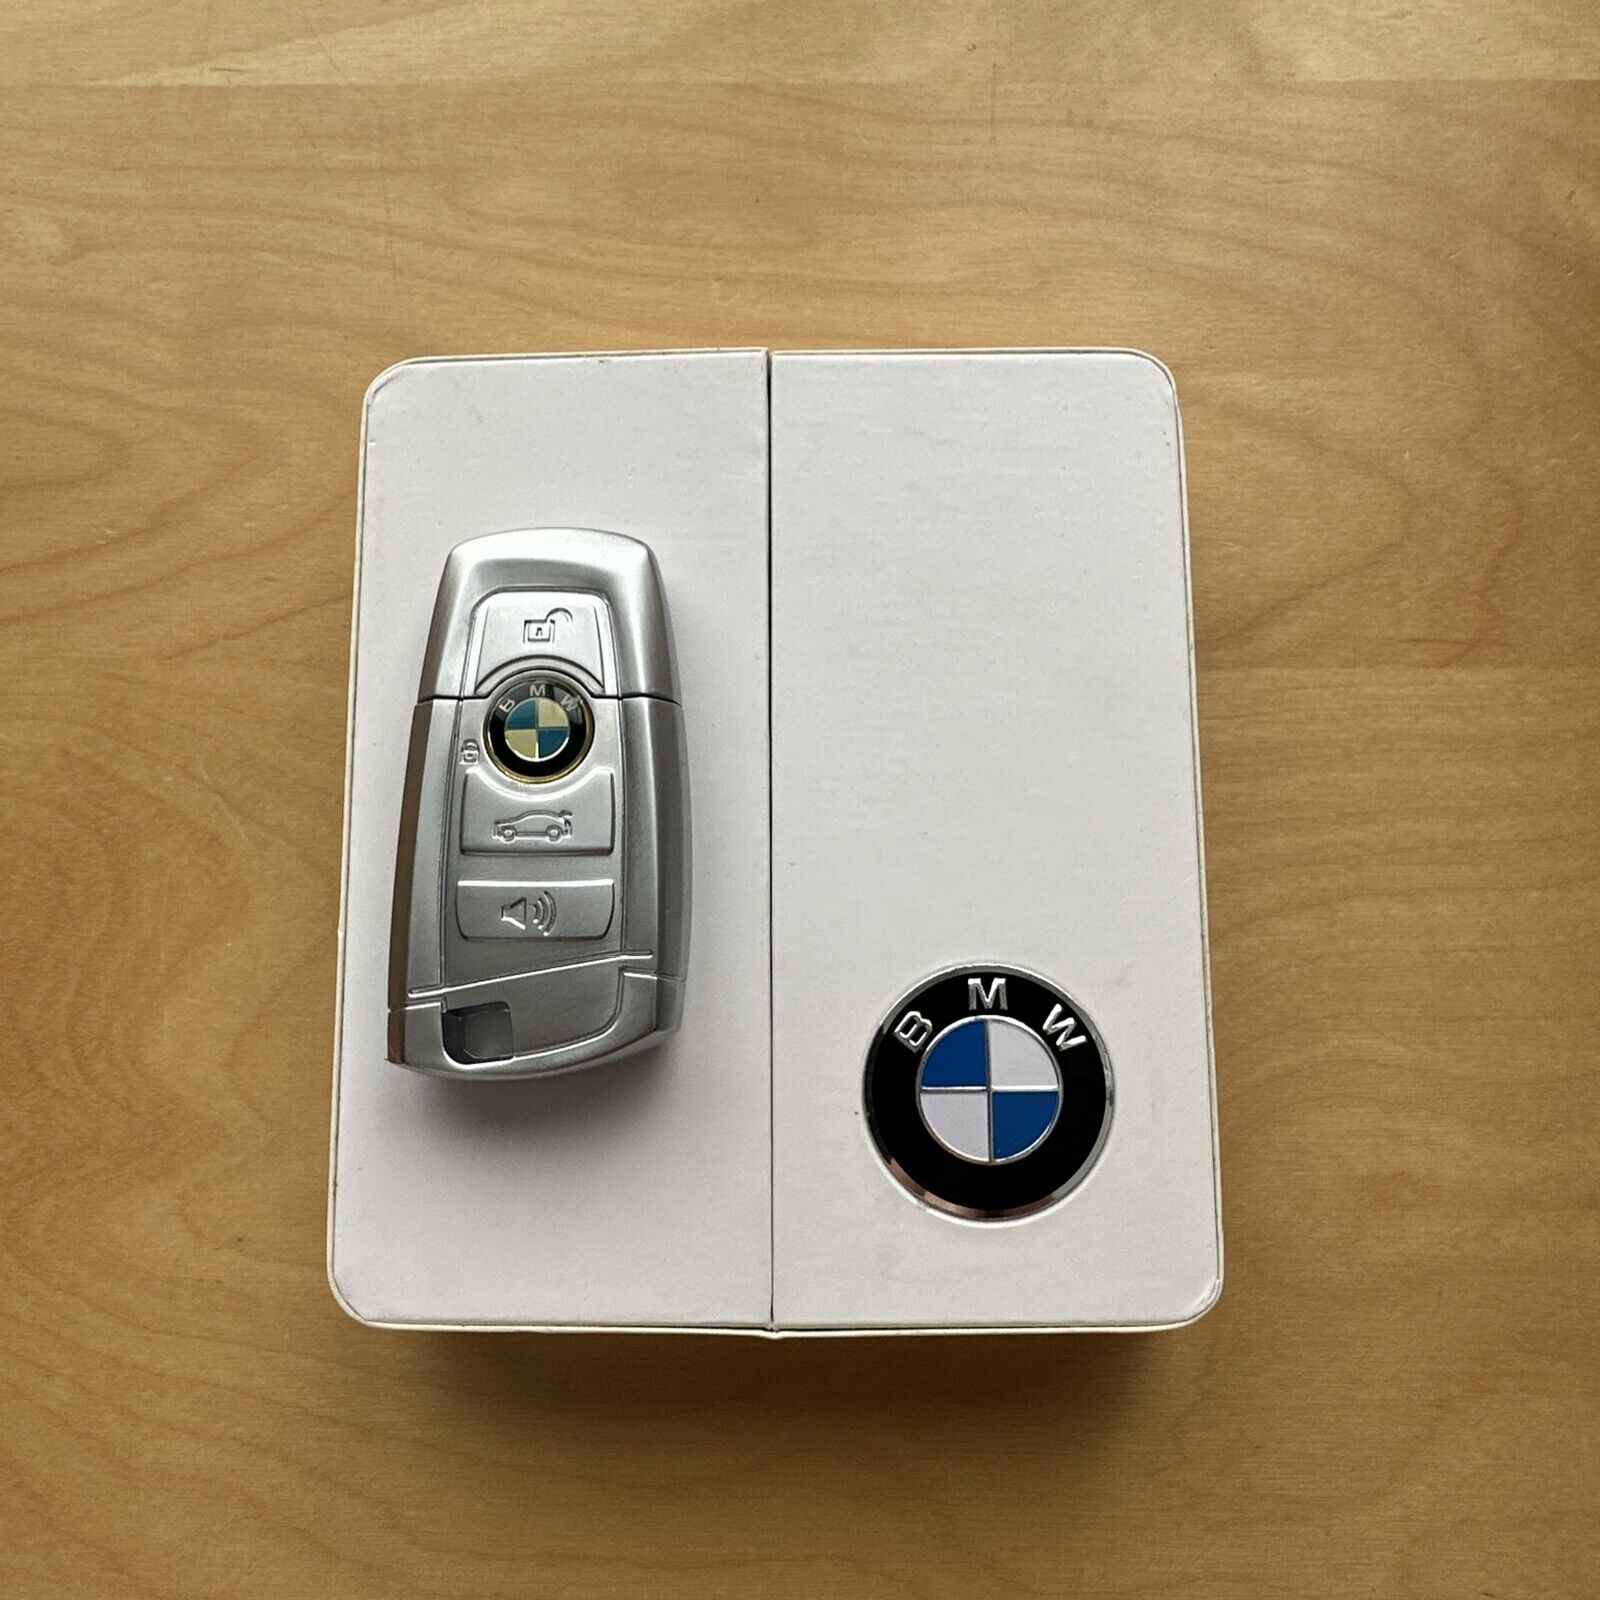 BMW Advertising 2GB Metal USB Thumb Drive Flash Drive in White Case - VG+ LN